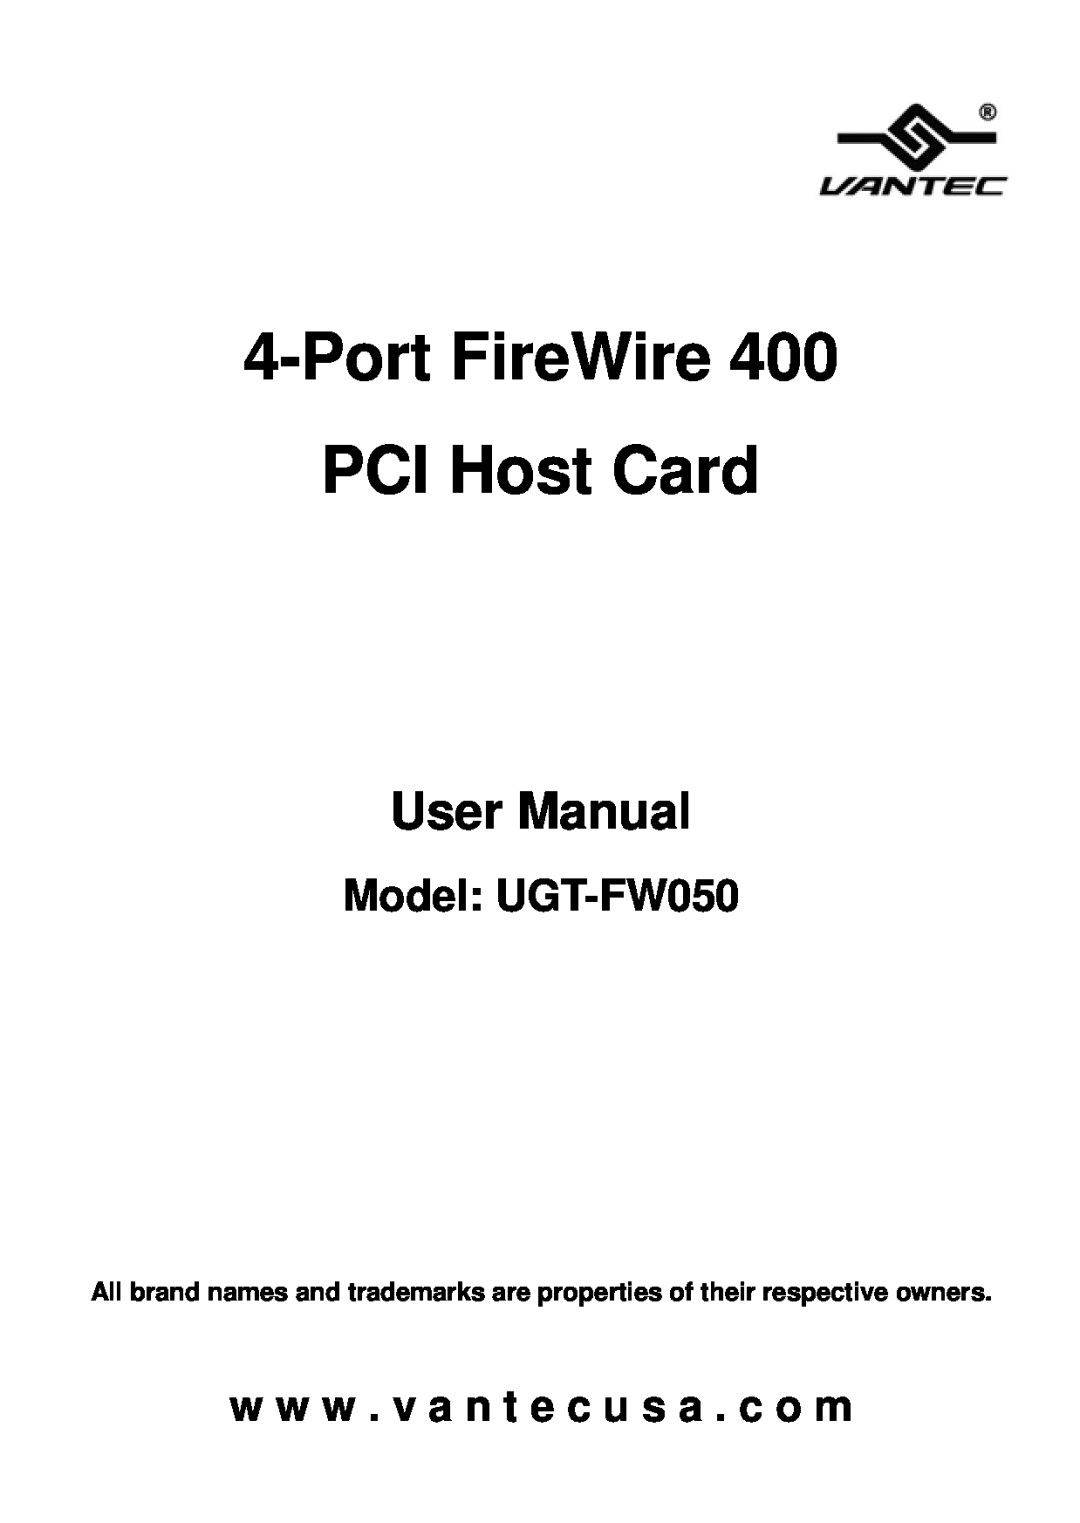 Vantec user manual Port FireWire PCI Host Card, User Manual, Model UGT-FW050, w w w . v a n t e c u s a . c o m 